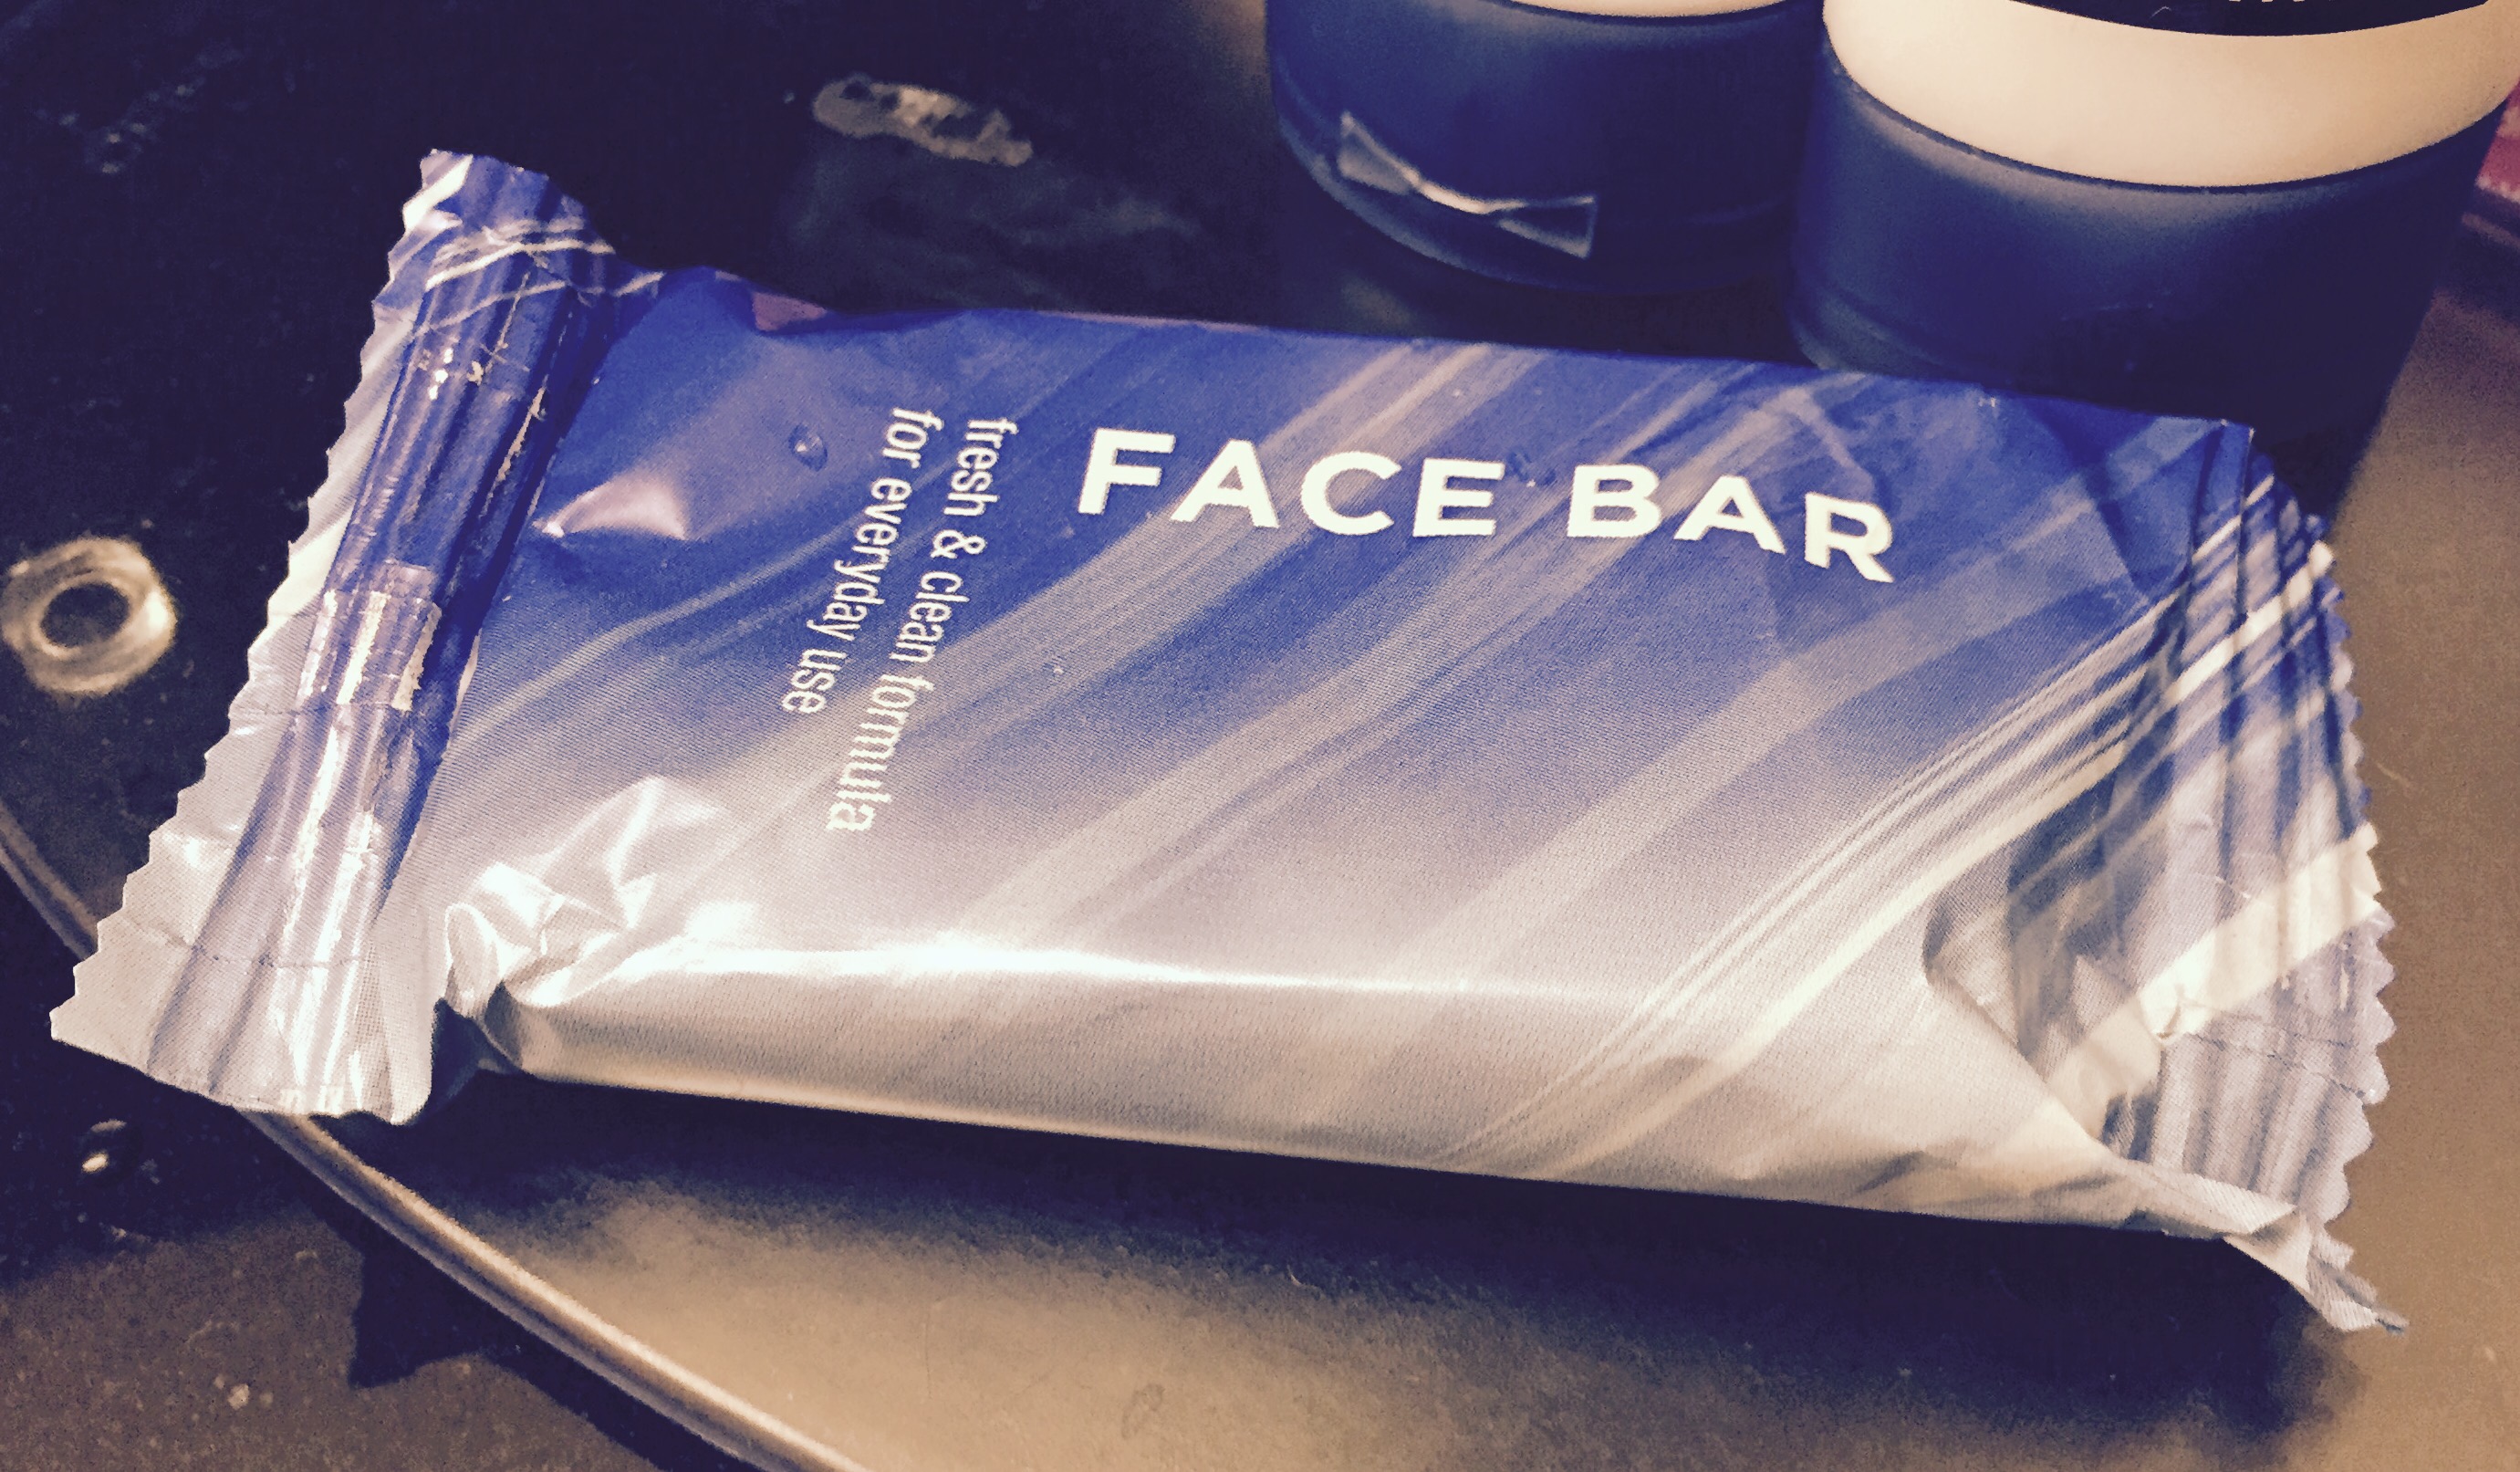 A Face Bar